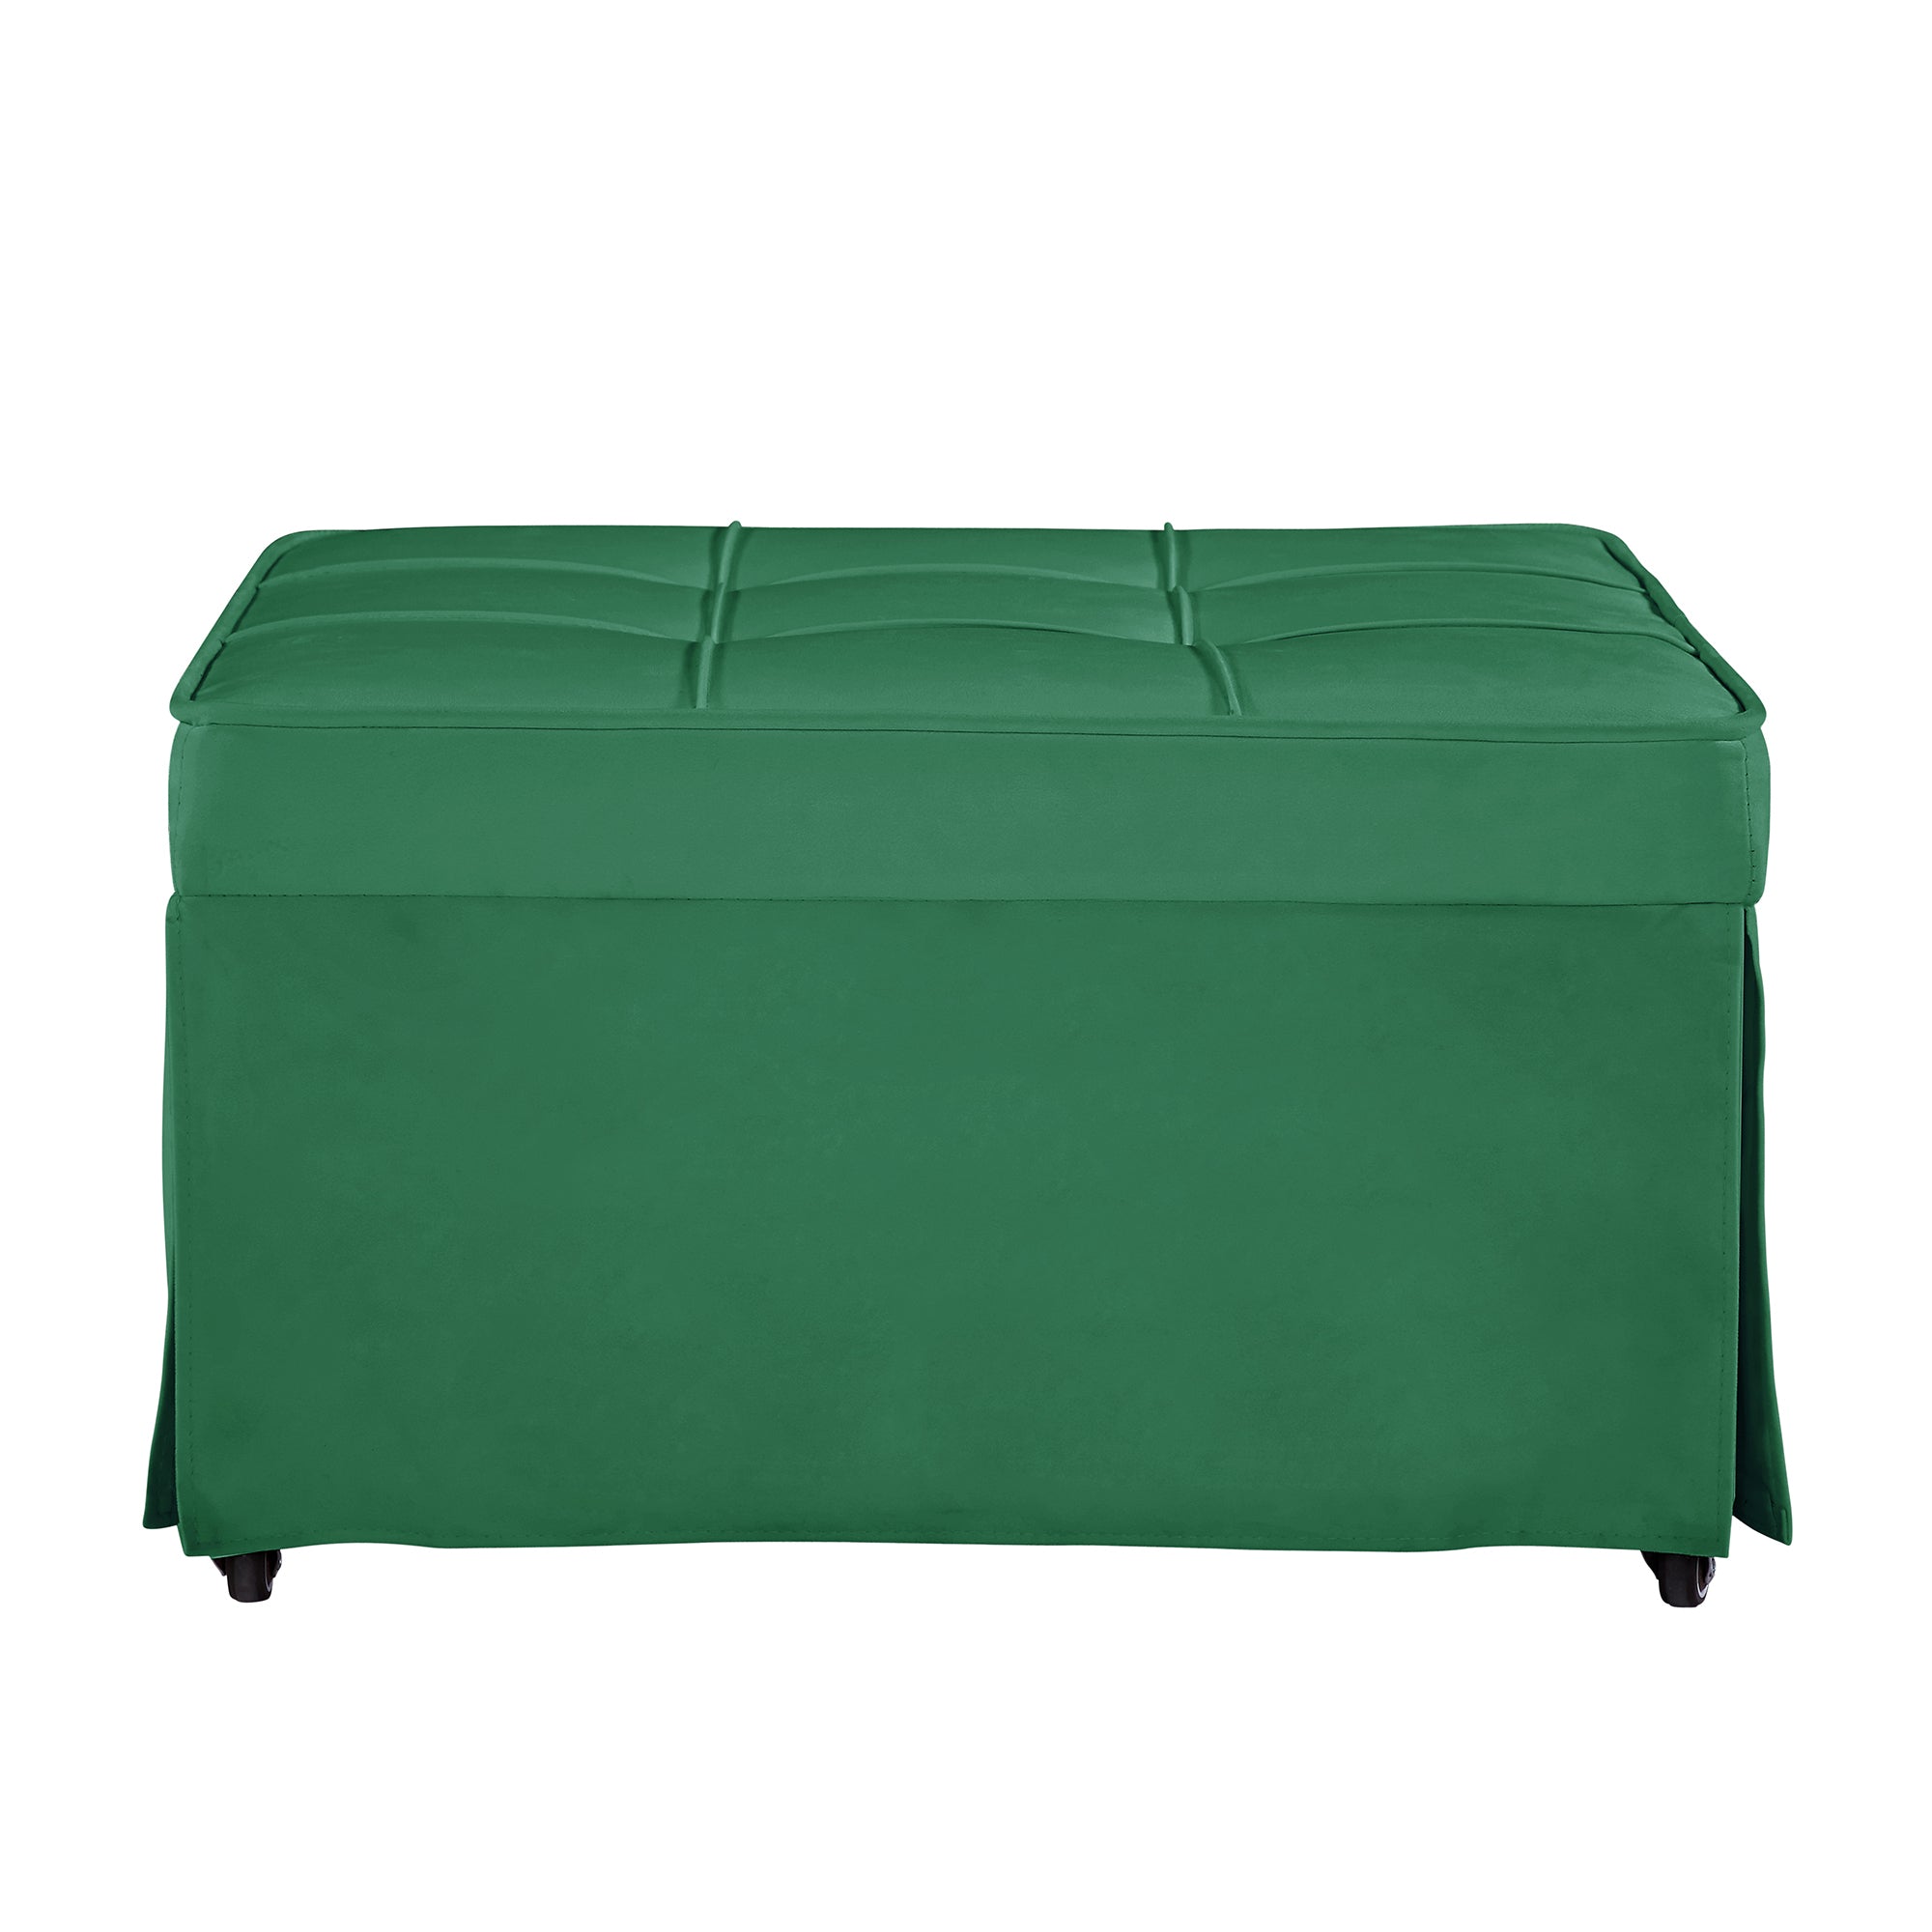 4 in 1 Folding Sleeper Sofa Bed w/ Adjustable Backrest & Pillow, No Armrest, Green